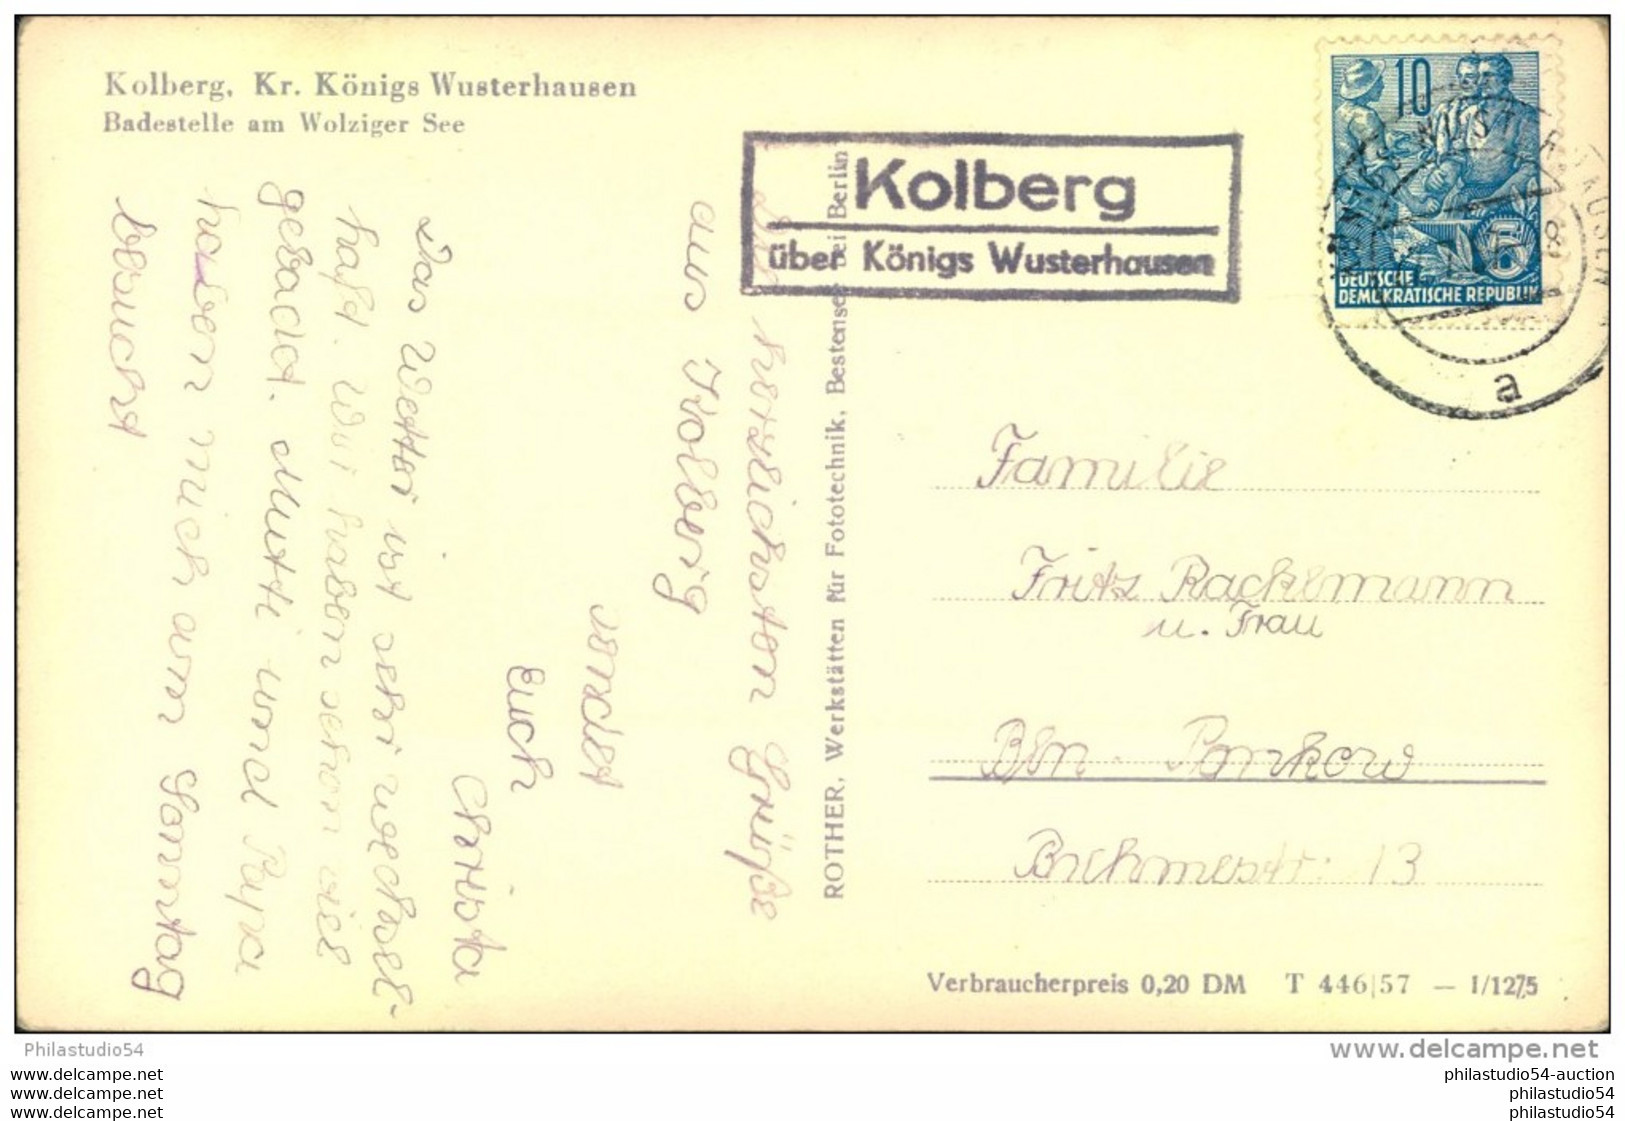 Brandenburg : 1957, Postkarte Posthilfsstelle "Kolberg über Königs Wusterhausen" - Franking Machines (EMA)